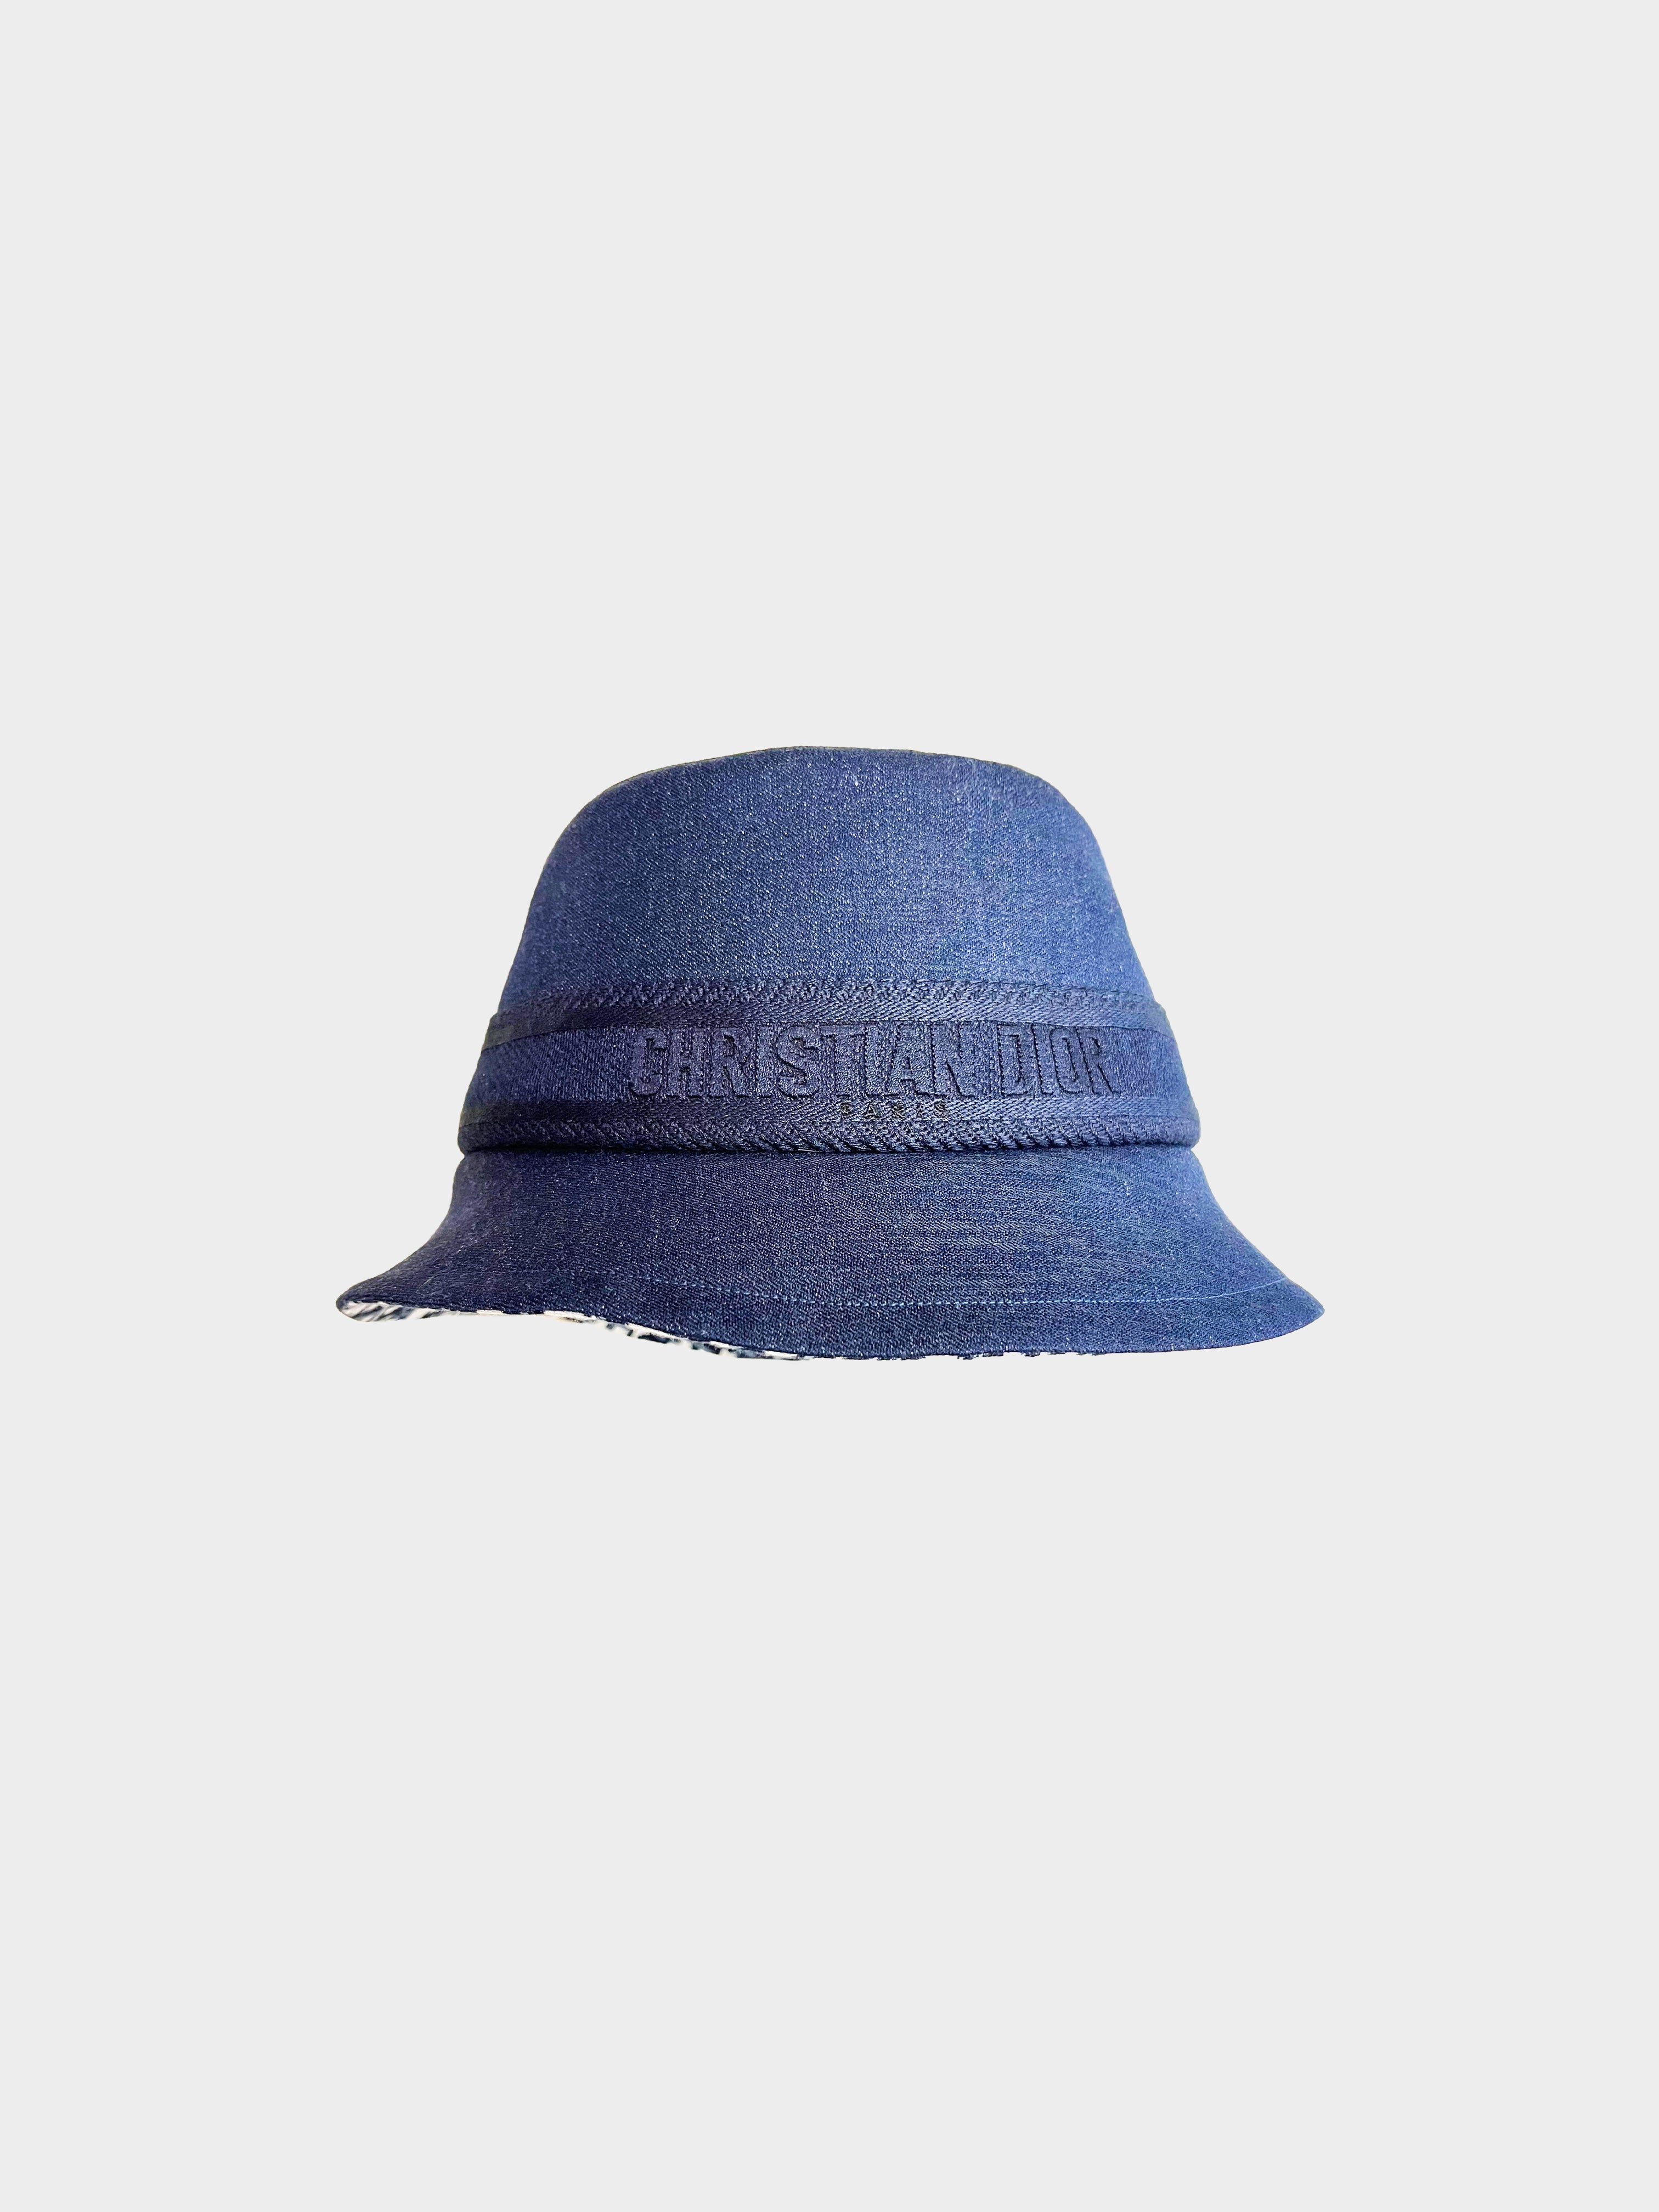 Christian Dior 2010s Navy Blue Small Brim Bucket Hat